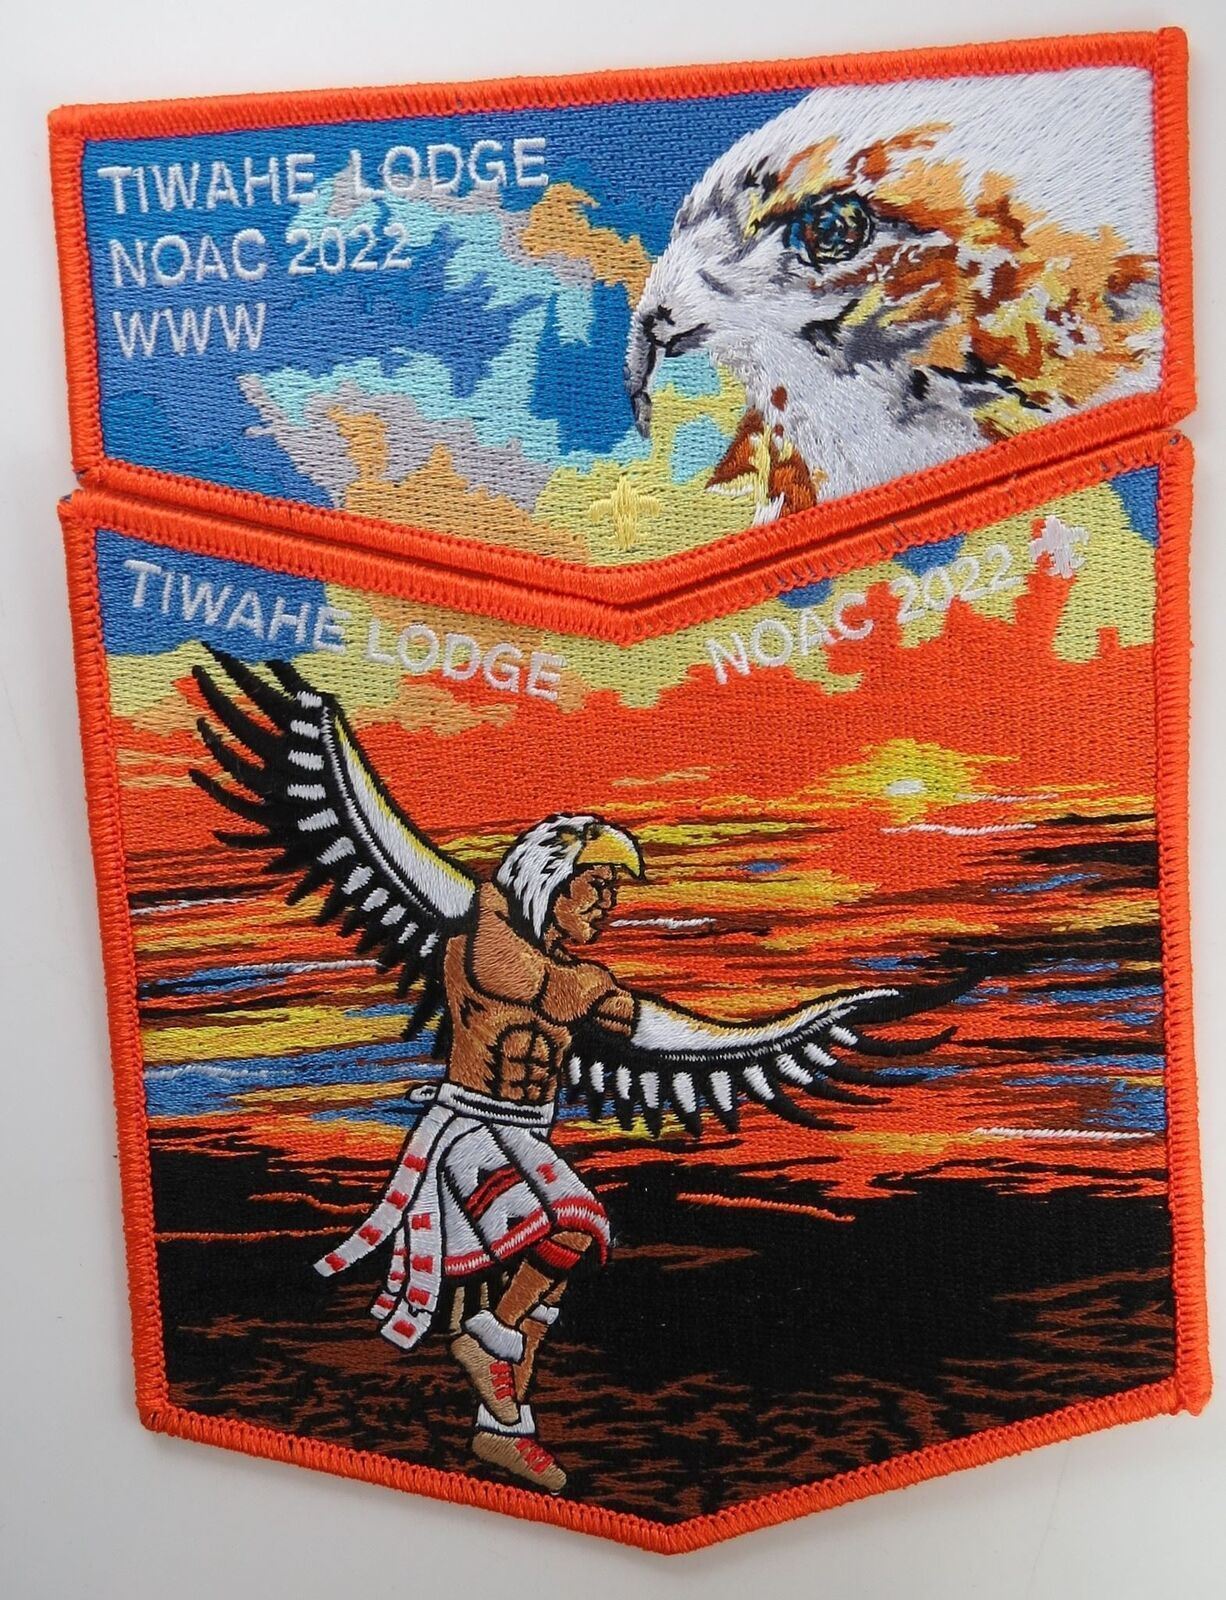 NOAC 2022 WWW Tiwahe Lodge ORANGE Bdr. [TN116]